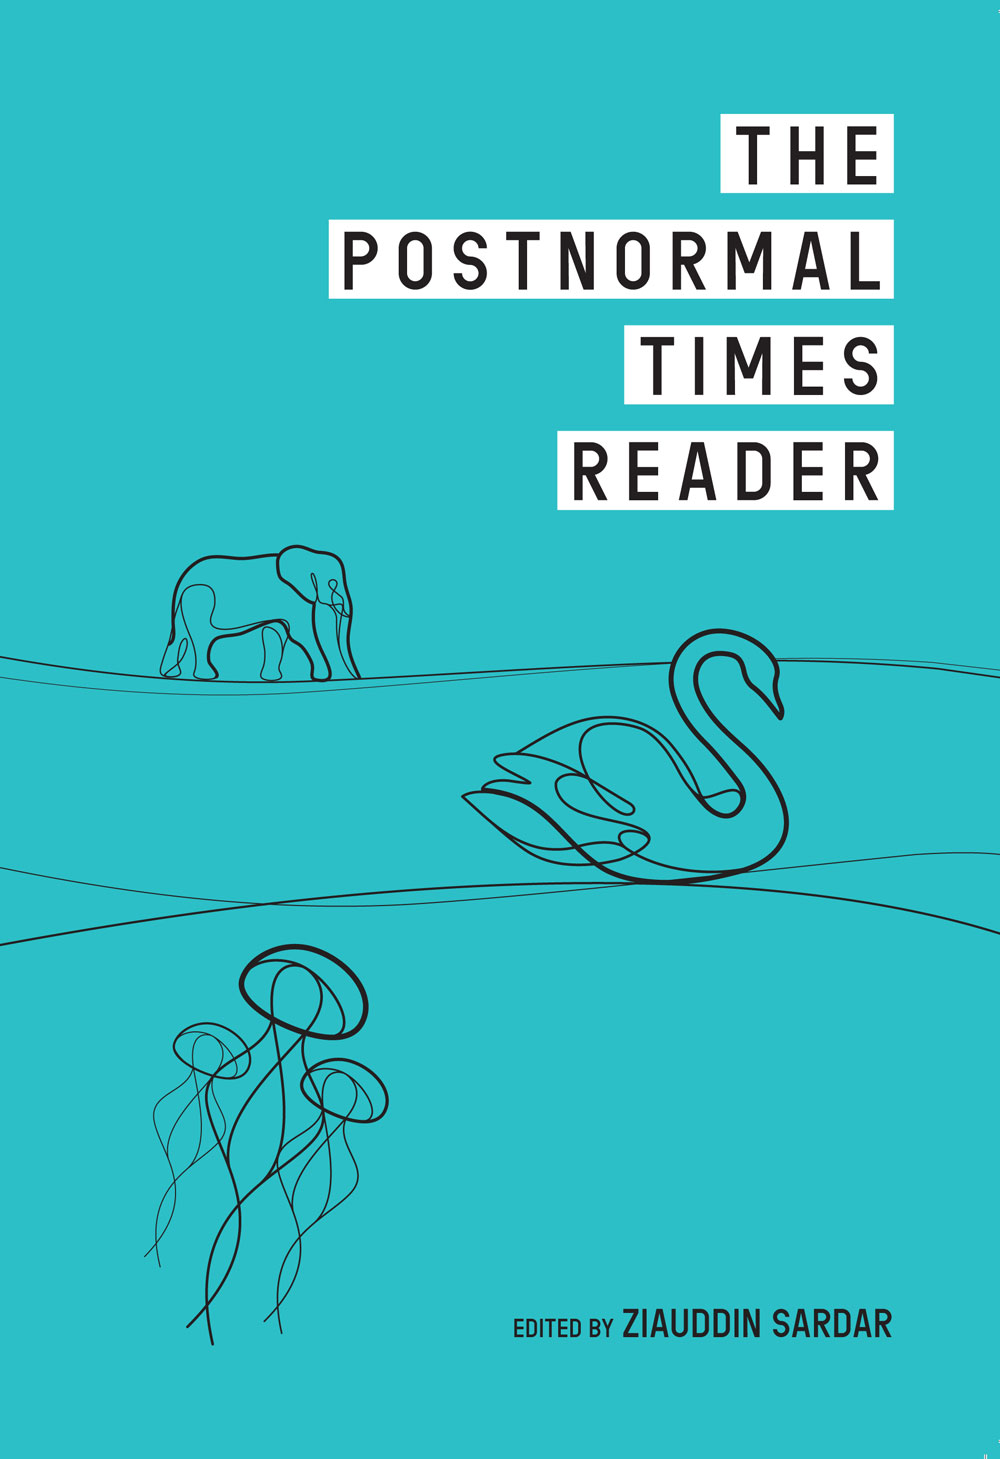 The Postnormal Times Reader